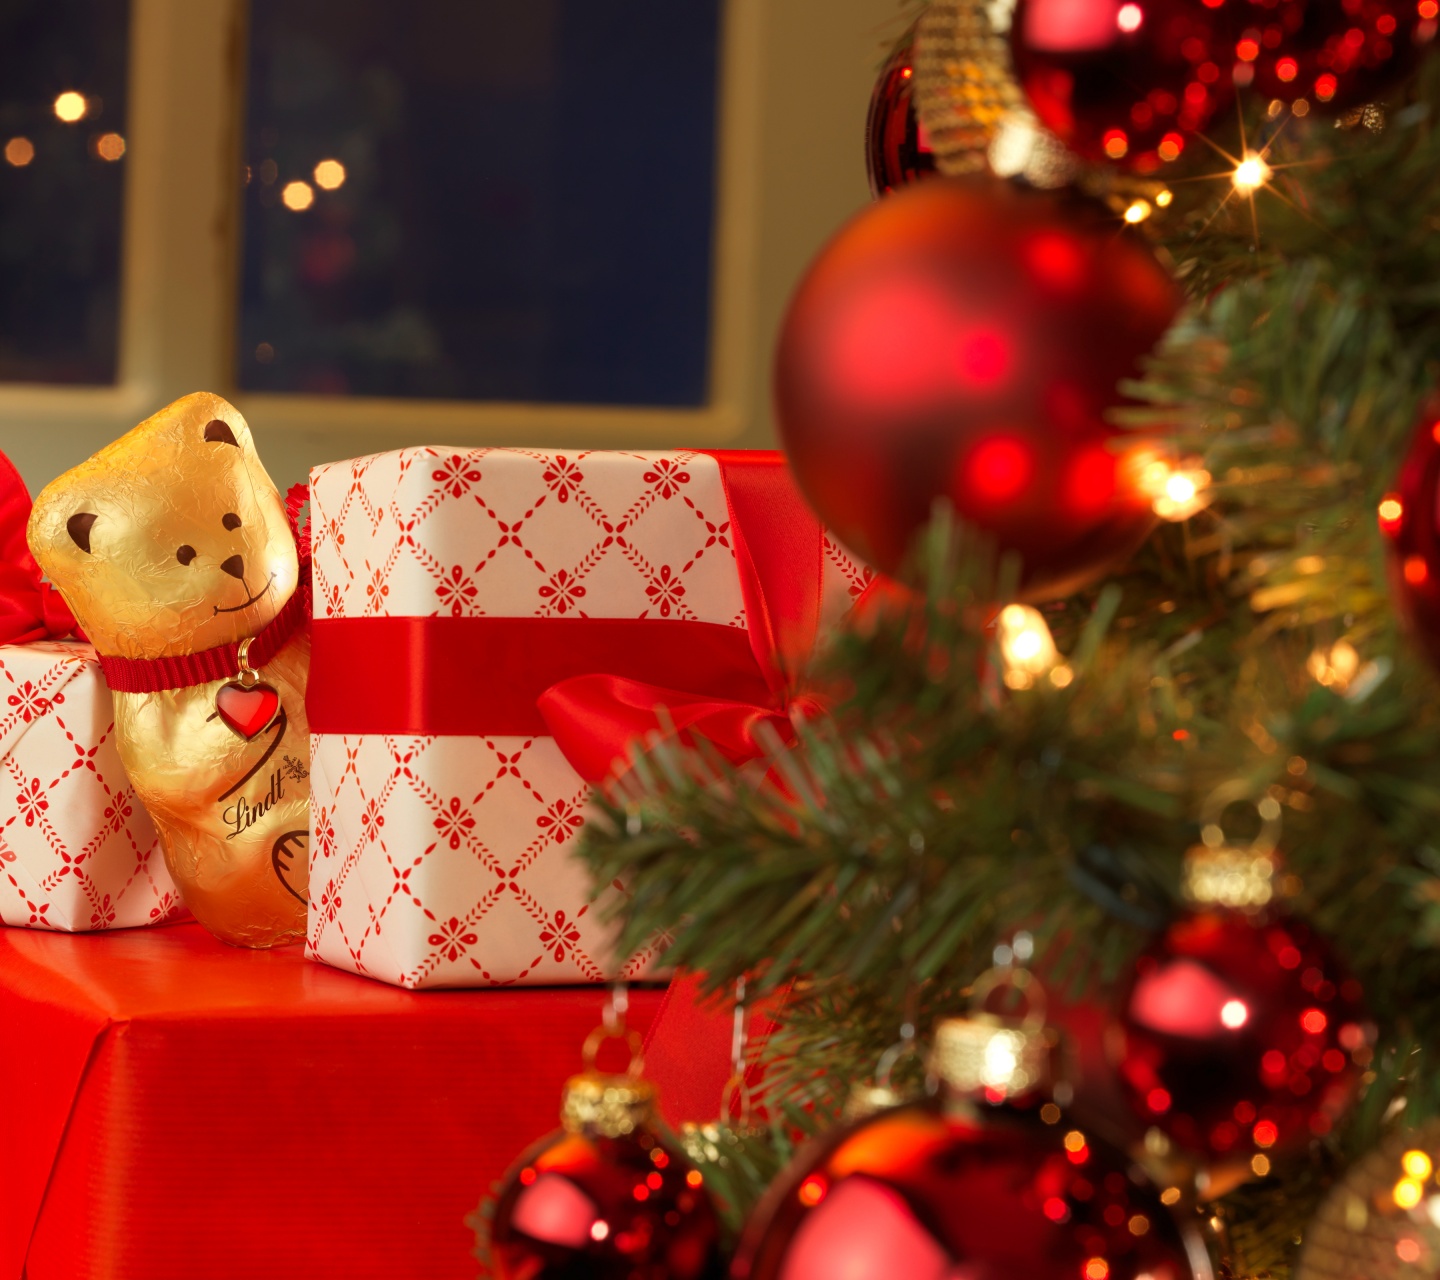 Teddy Bear Gifts And Christmas Tree